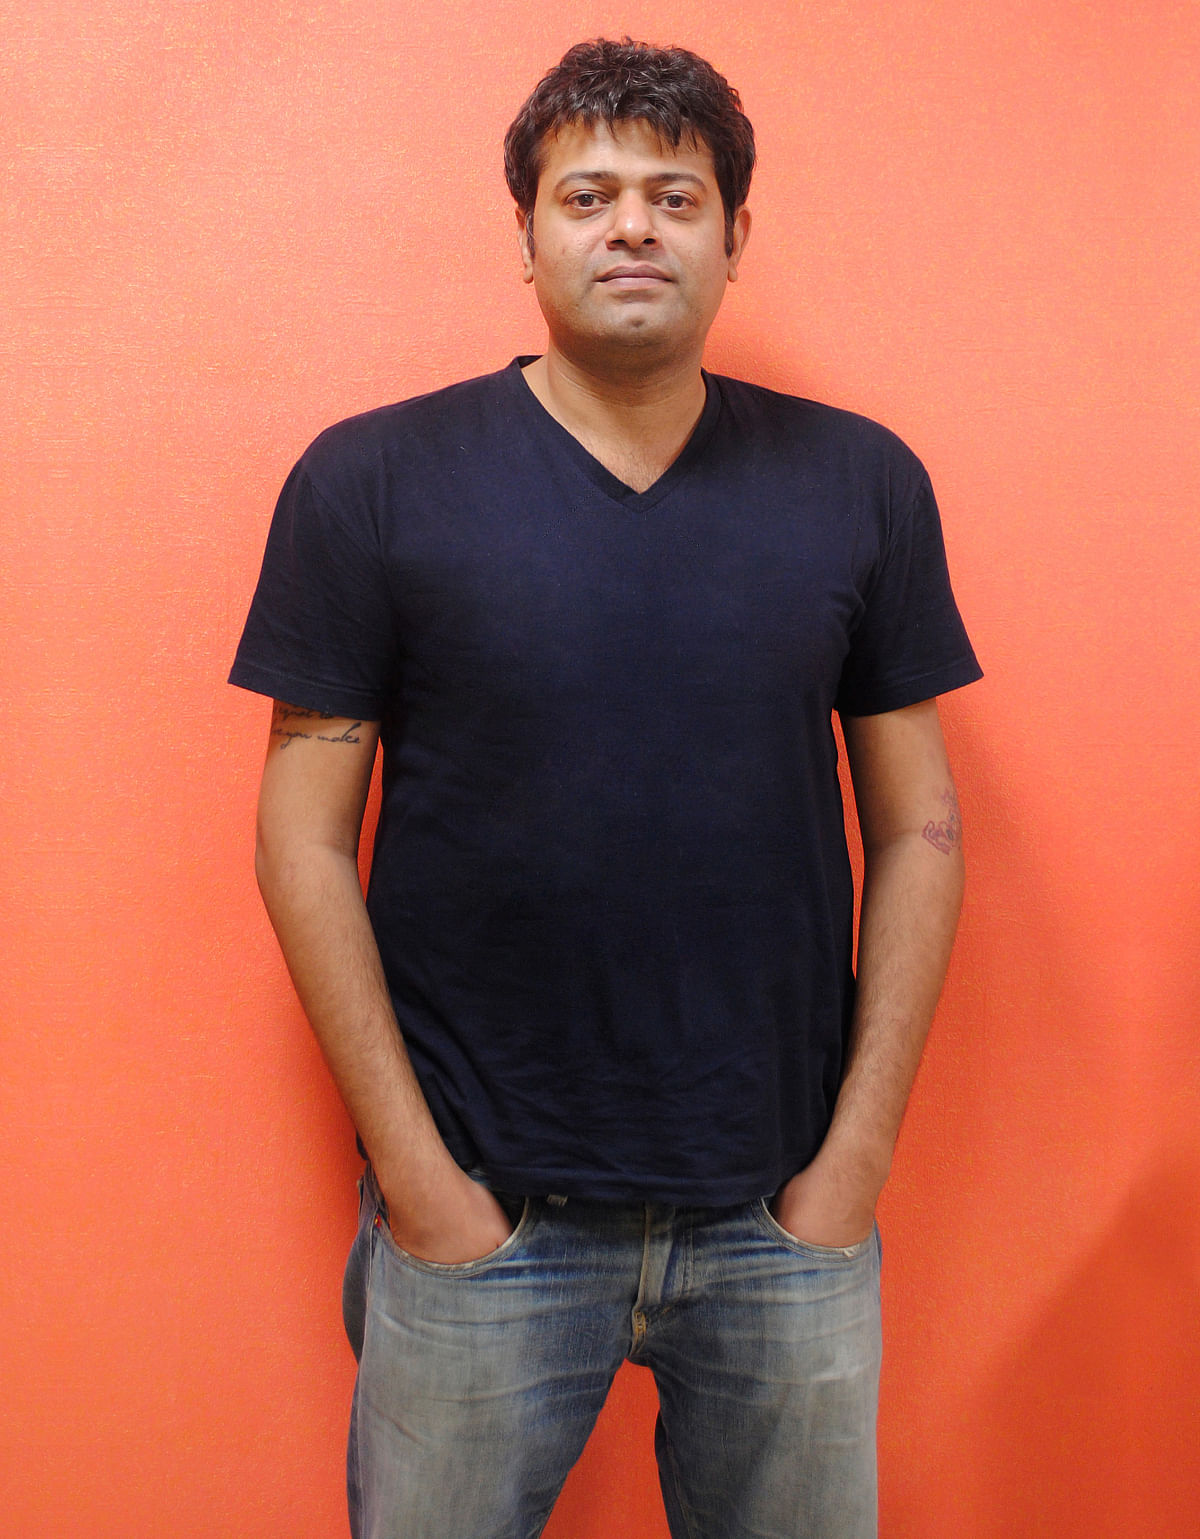 Sidharth Rao, co-founder and CEO, Dentsu Webchutney